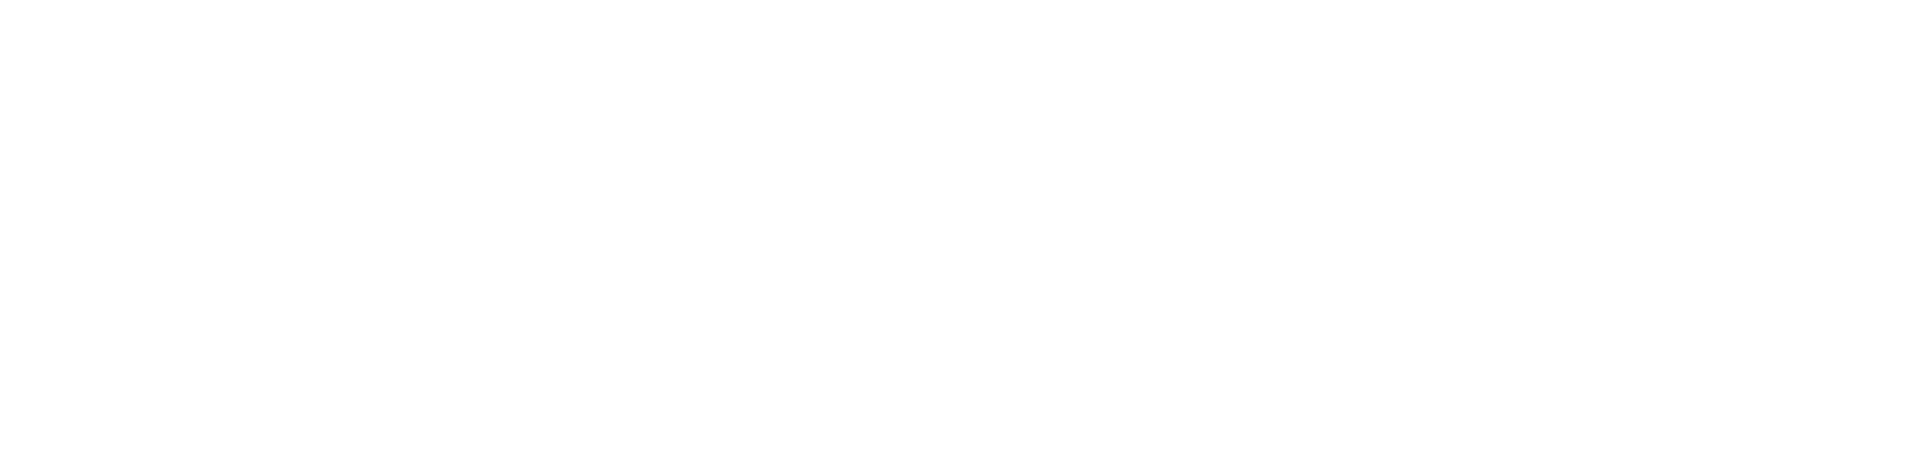 Hospitality Health Quick Care logo white text